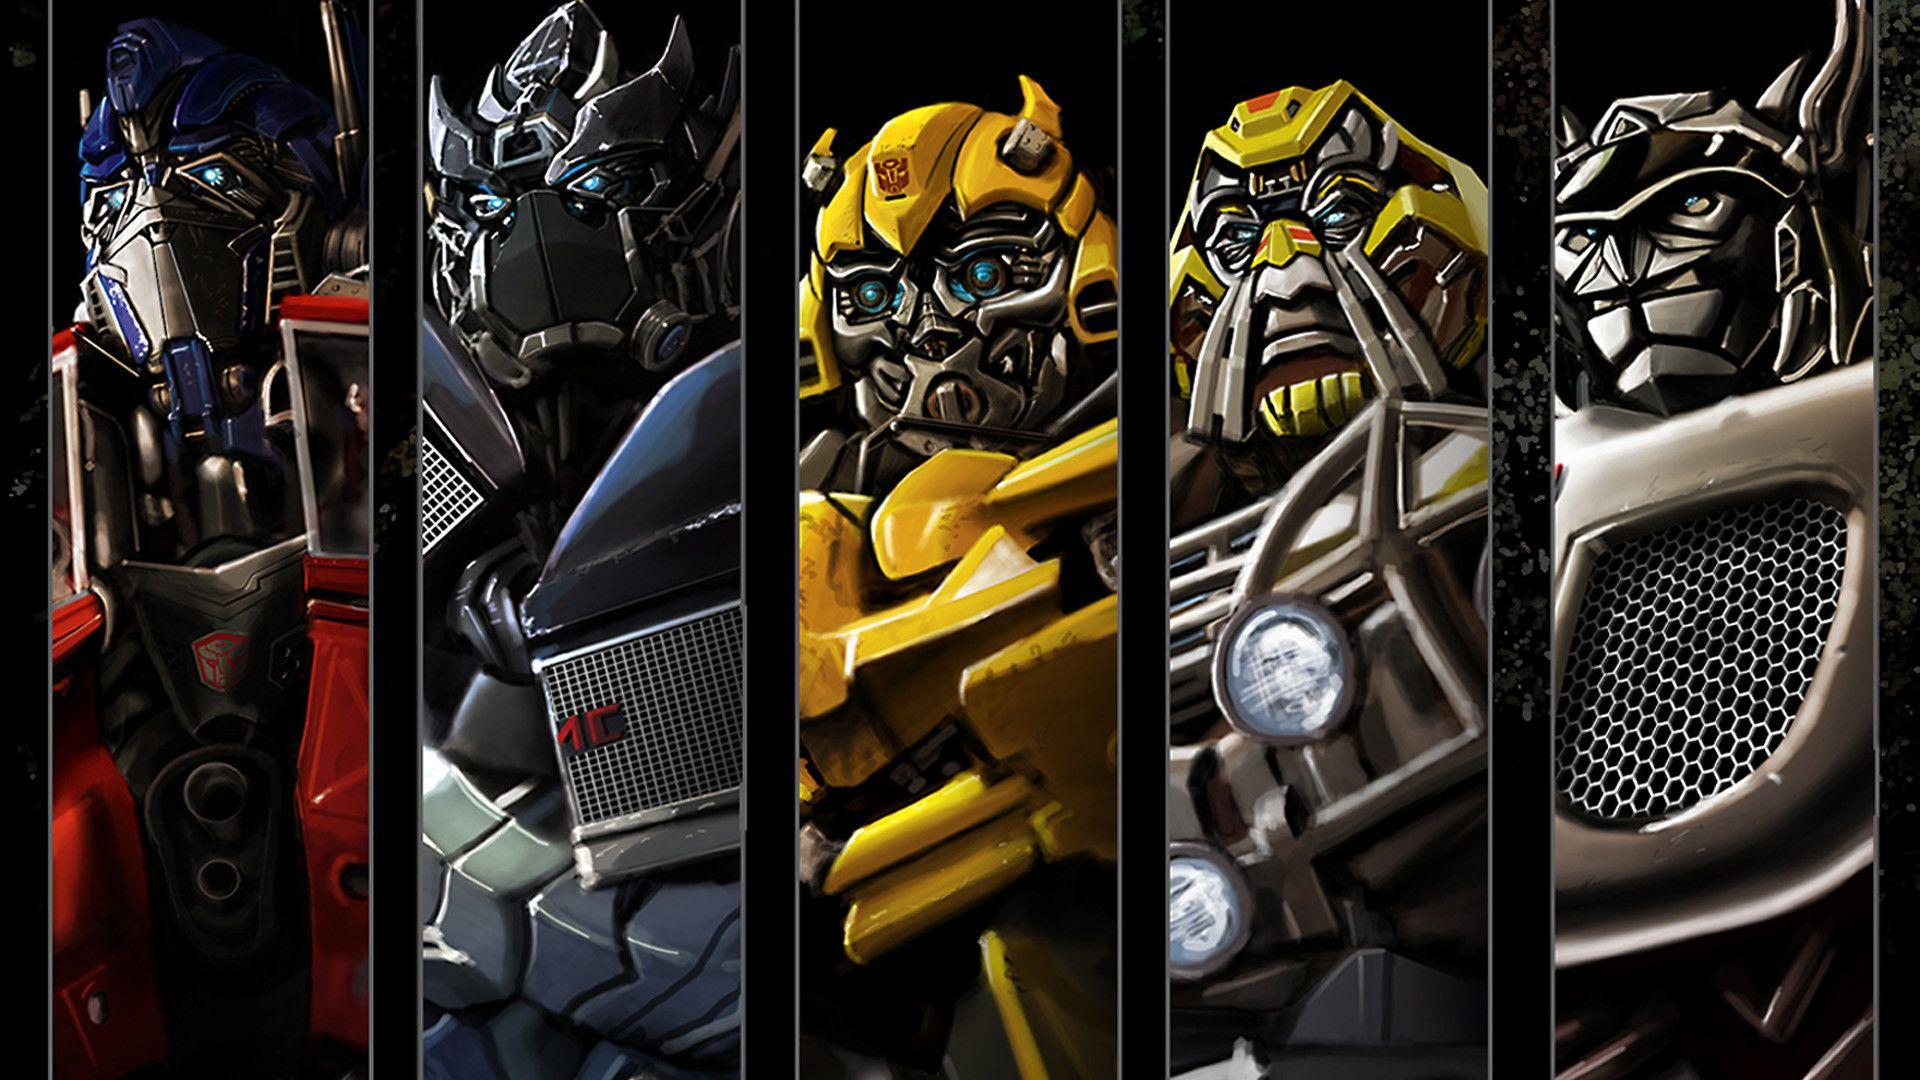 Transformers Bumblebee Wallpaper.com Wallpaper World